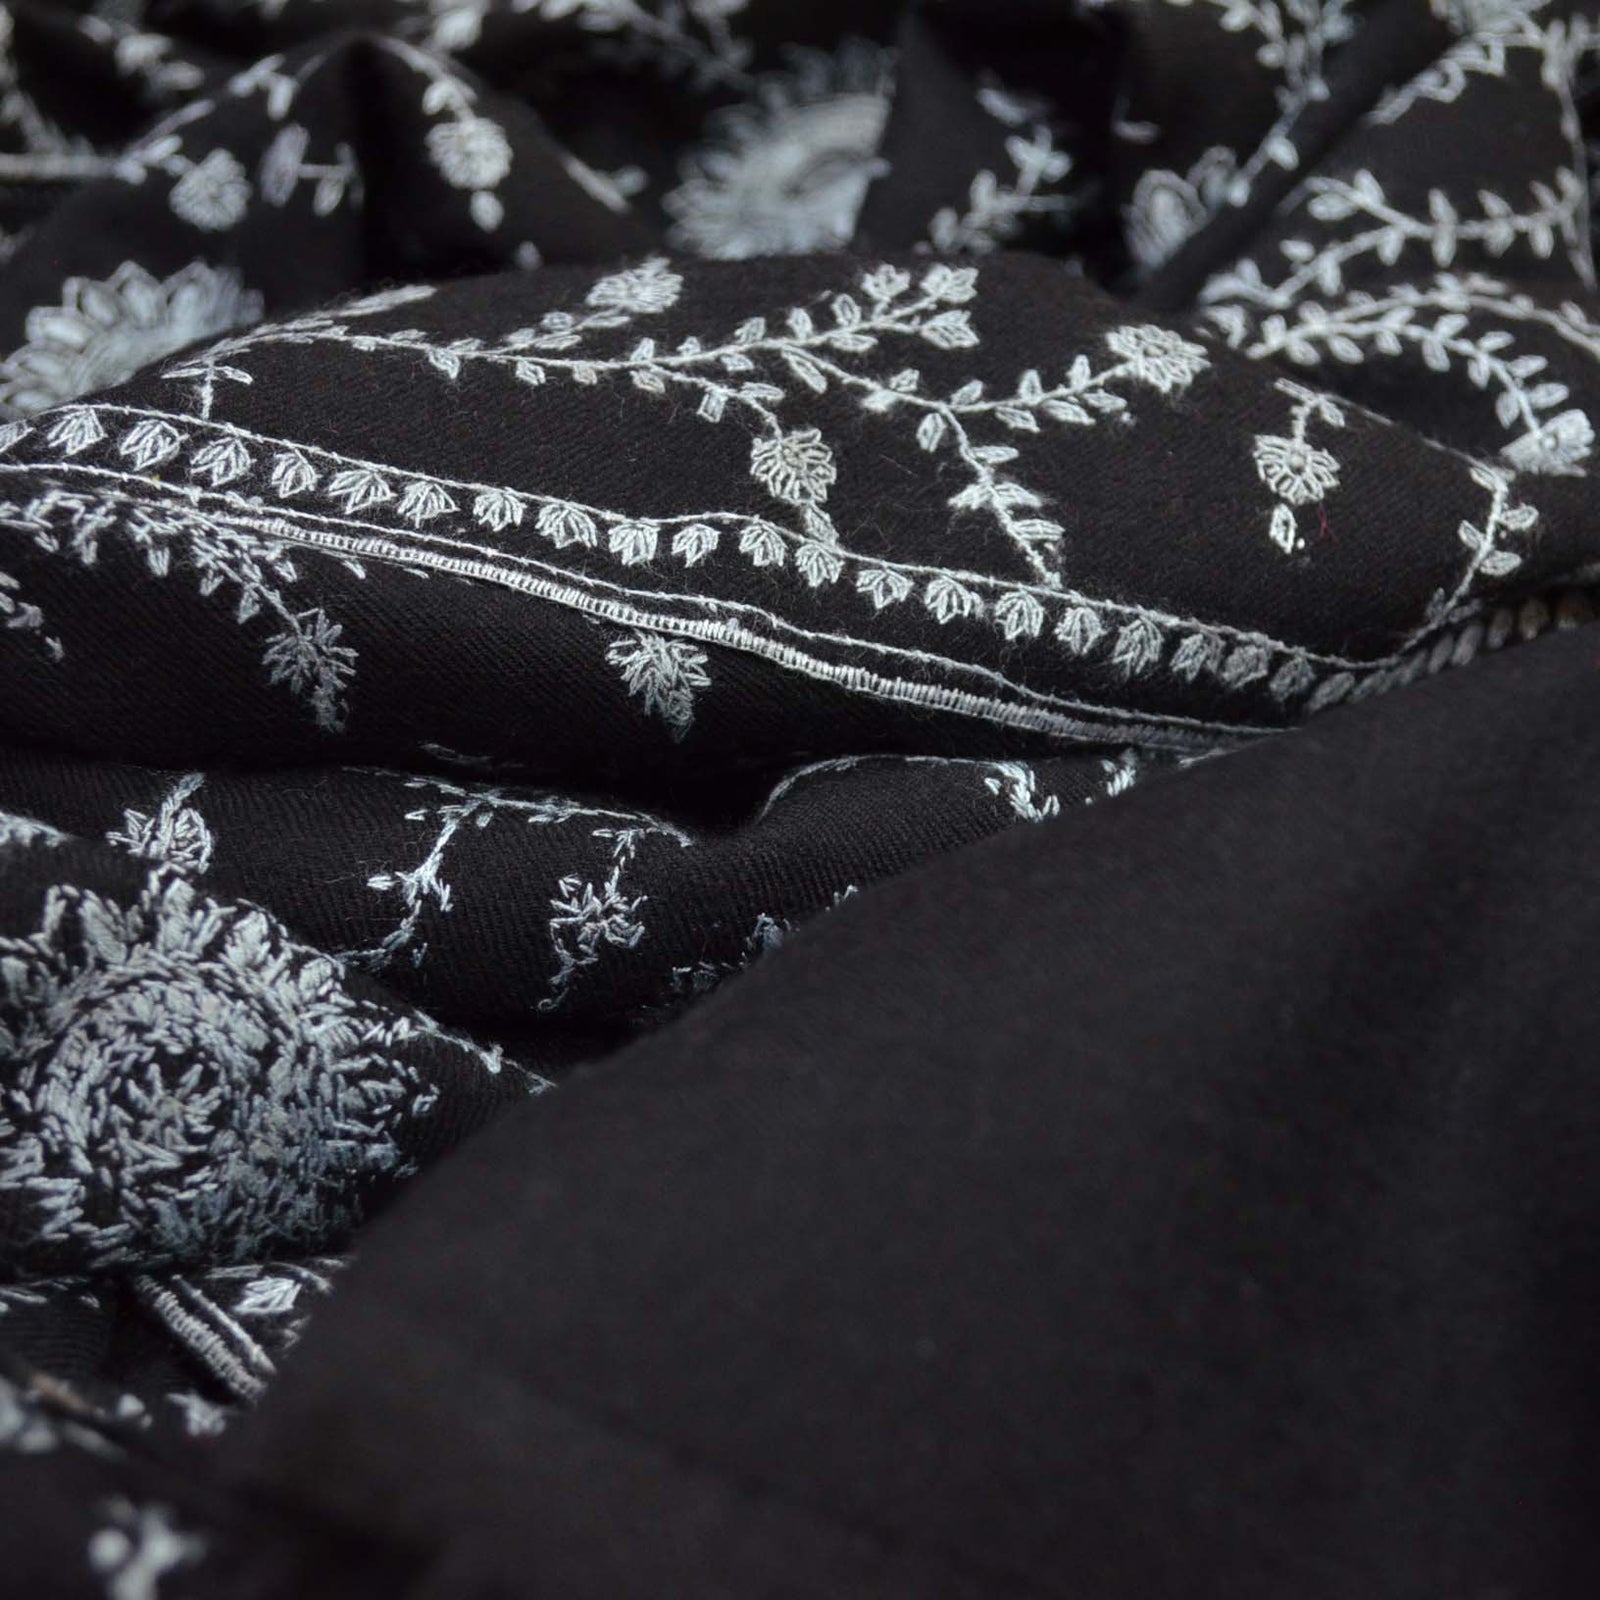 Pashmina embroidered shawl black color